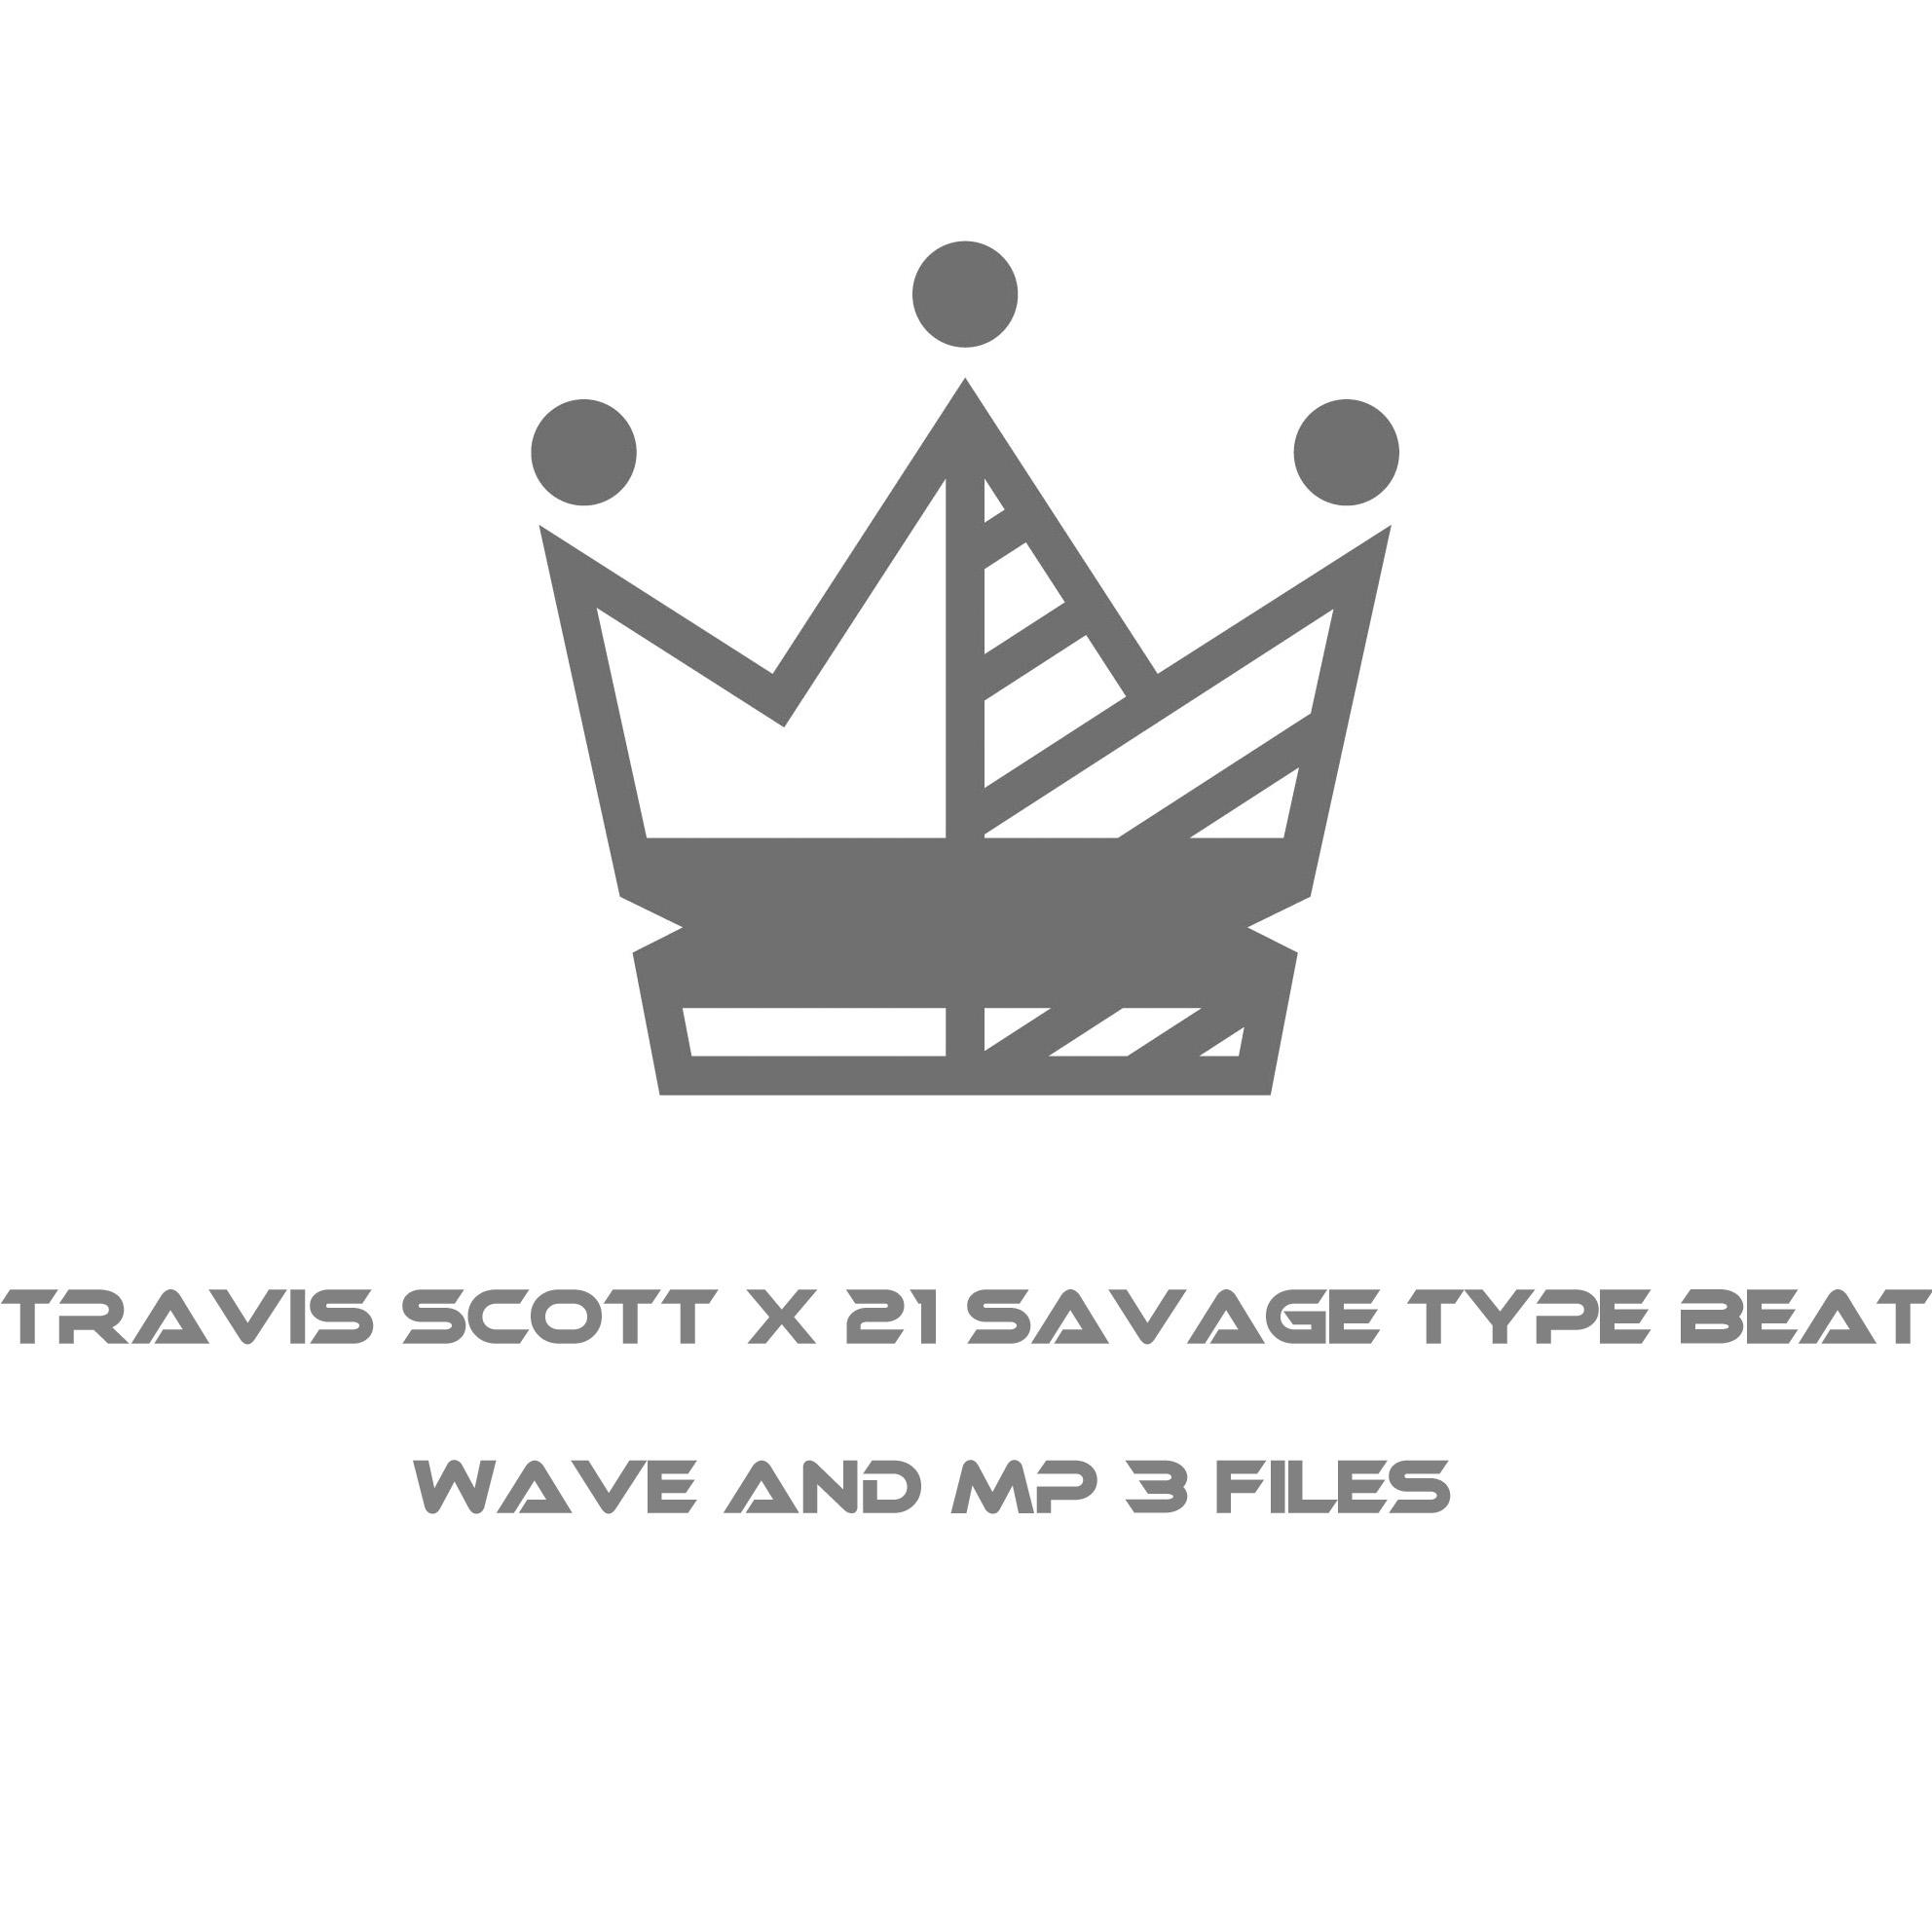 Savage Crown Logo - For Profit Use) Travis Scott X 21 Savage X 808 Mafia Type Beat ...